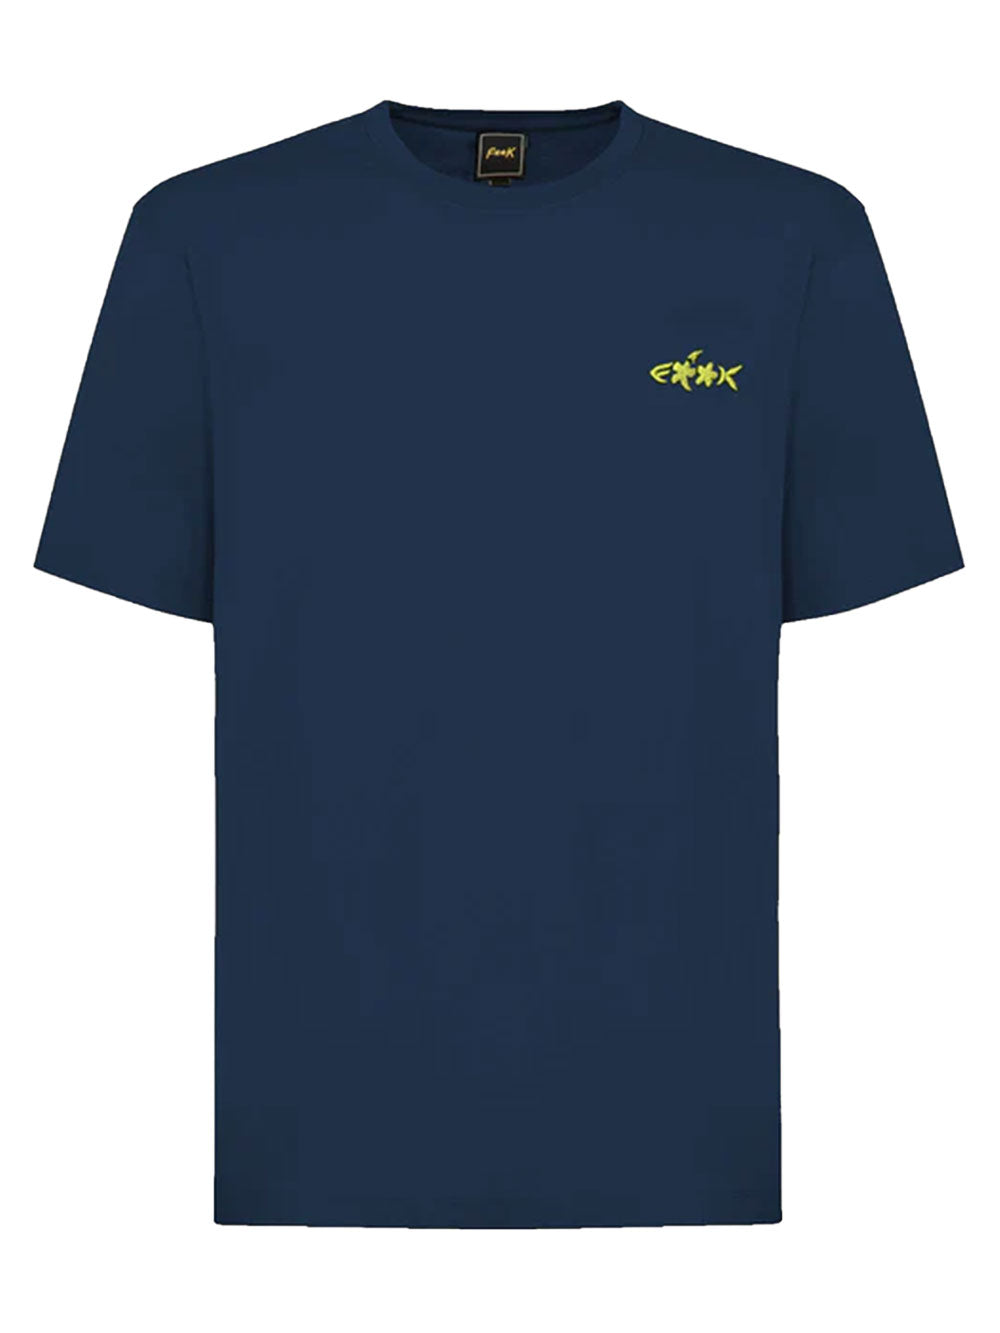 EFFEK Men's blue t-shirt